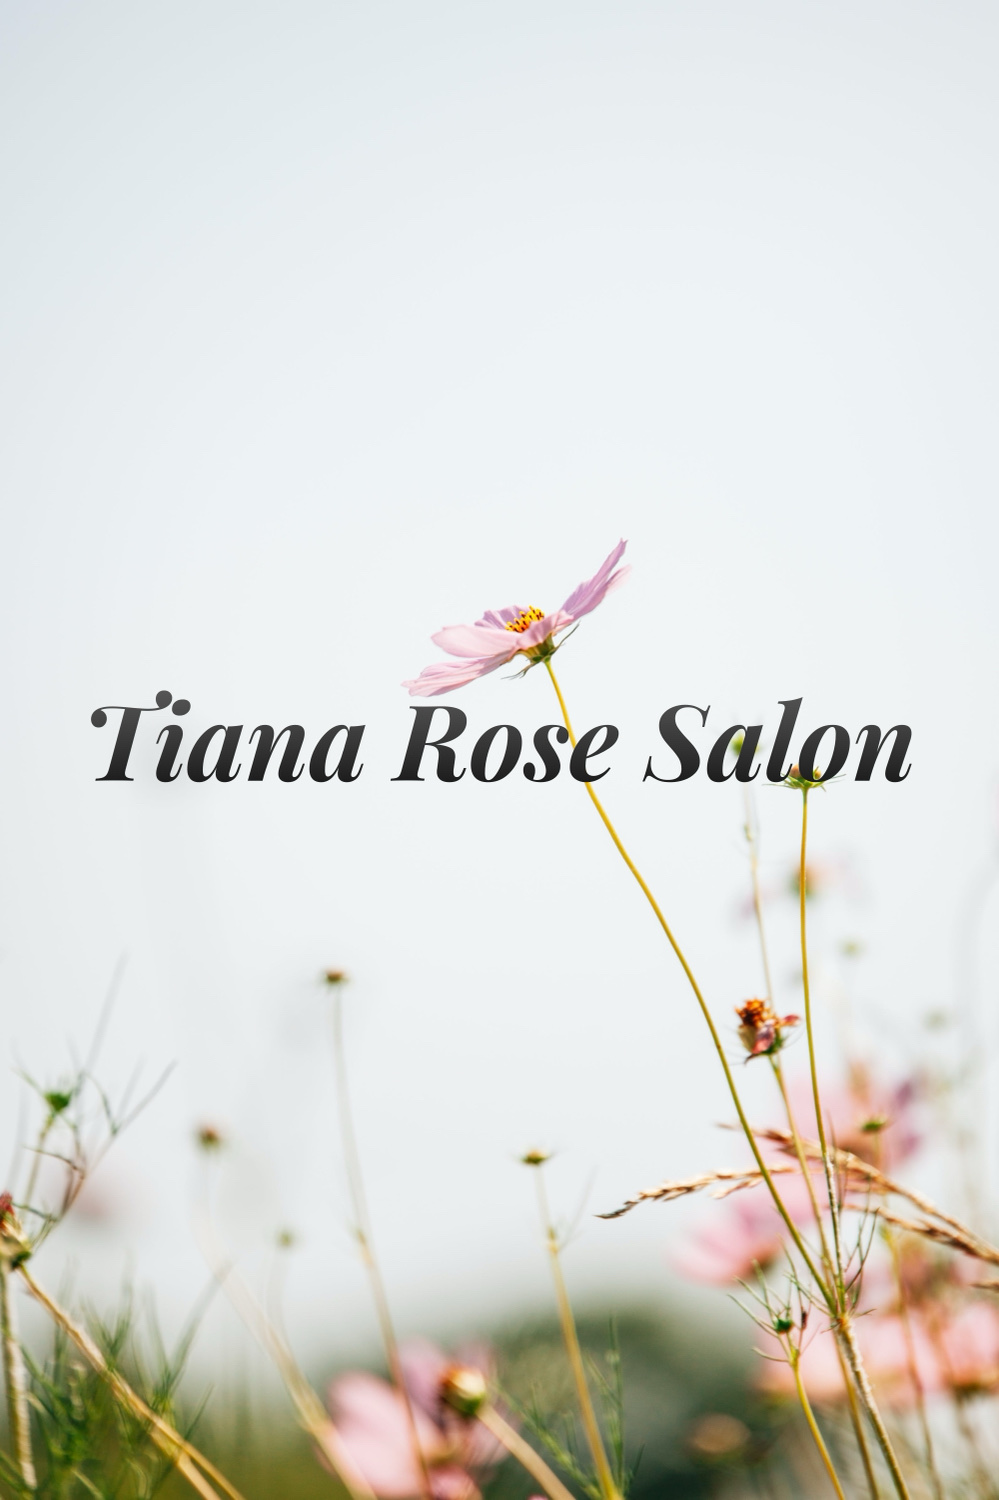 anne m klein share tiana rose photos